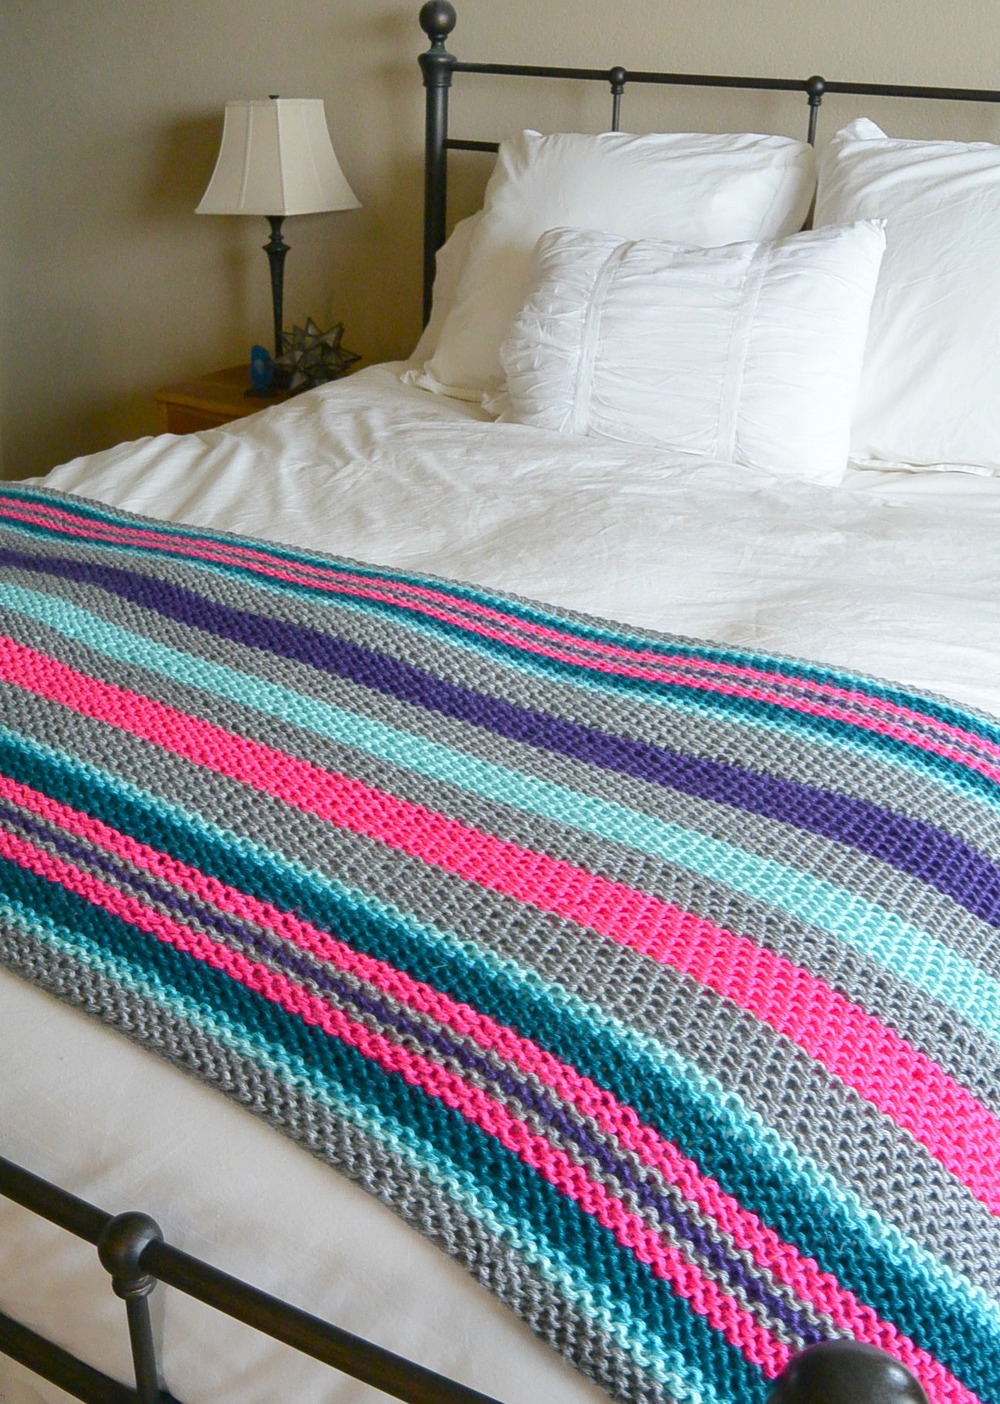 Native Stripes Knit Blanket | AllFreeKnitting.com